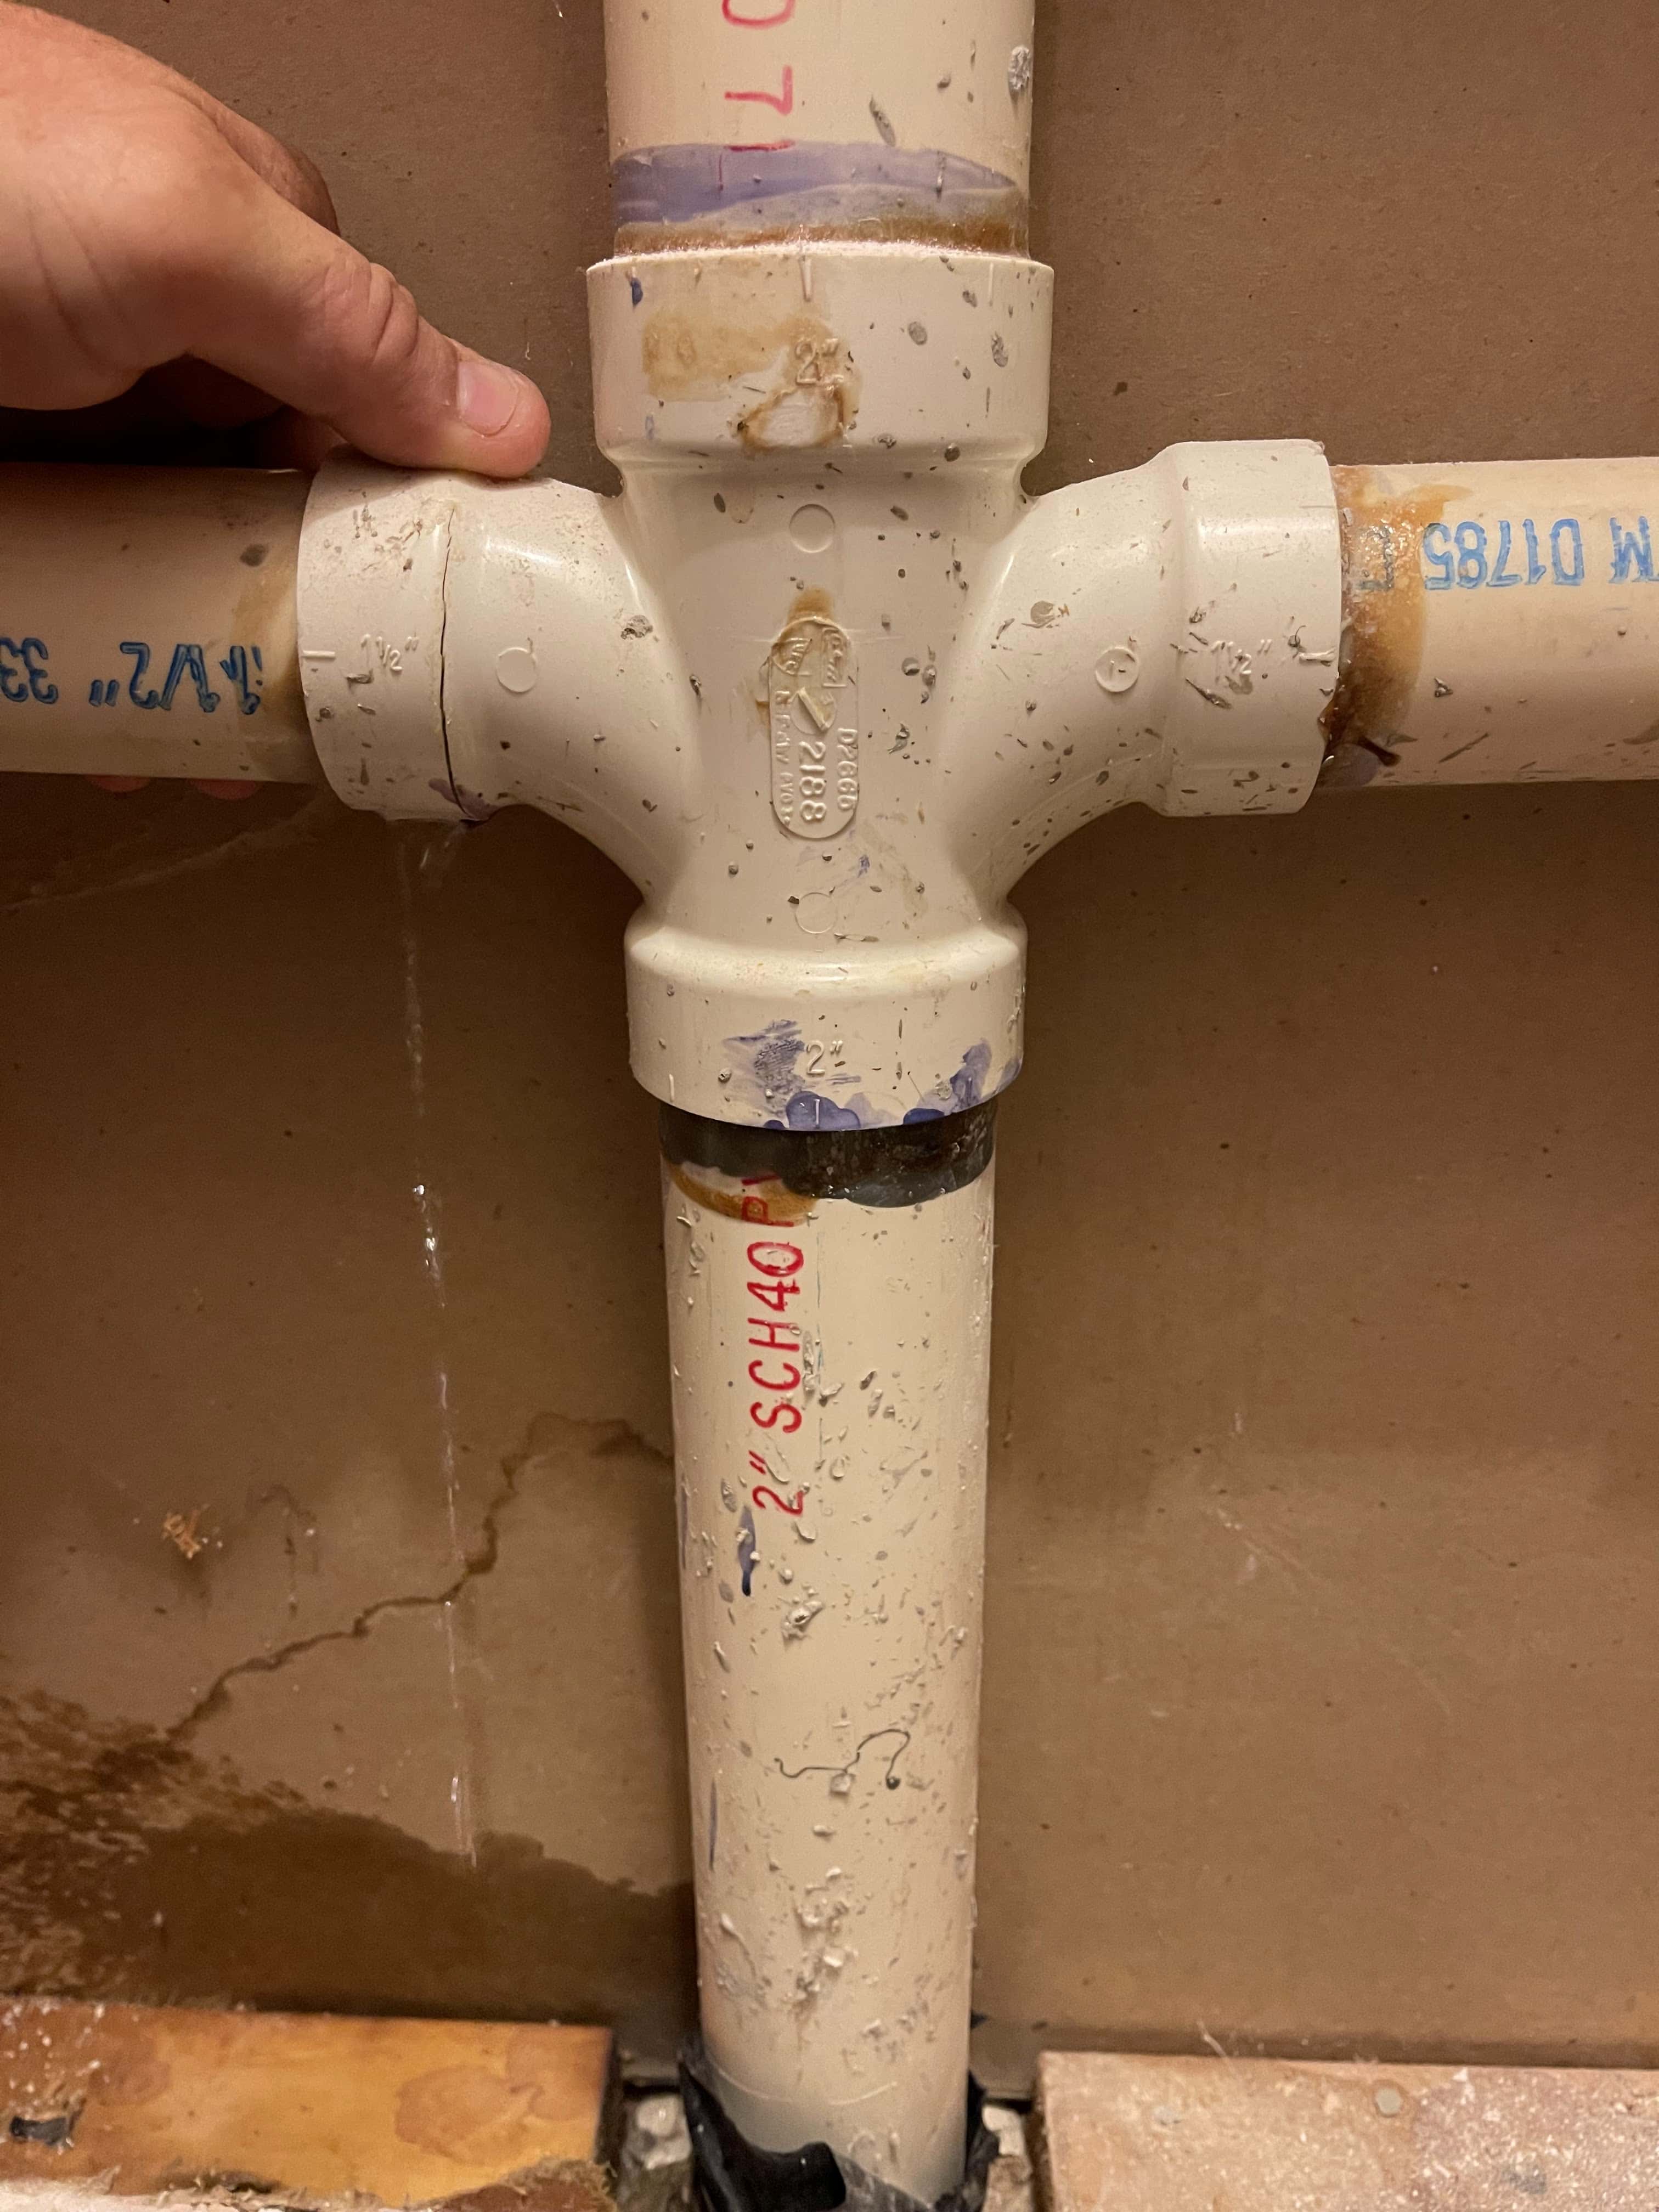 Douglas Technical Plumbing Service - Weatherford, TX, US, affordable plumbing